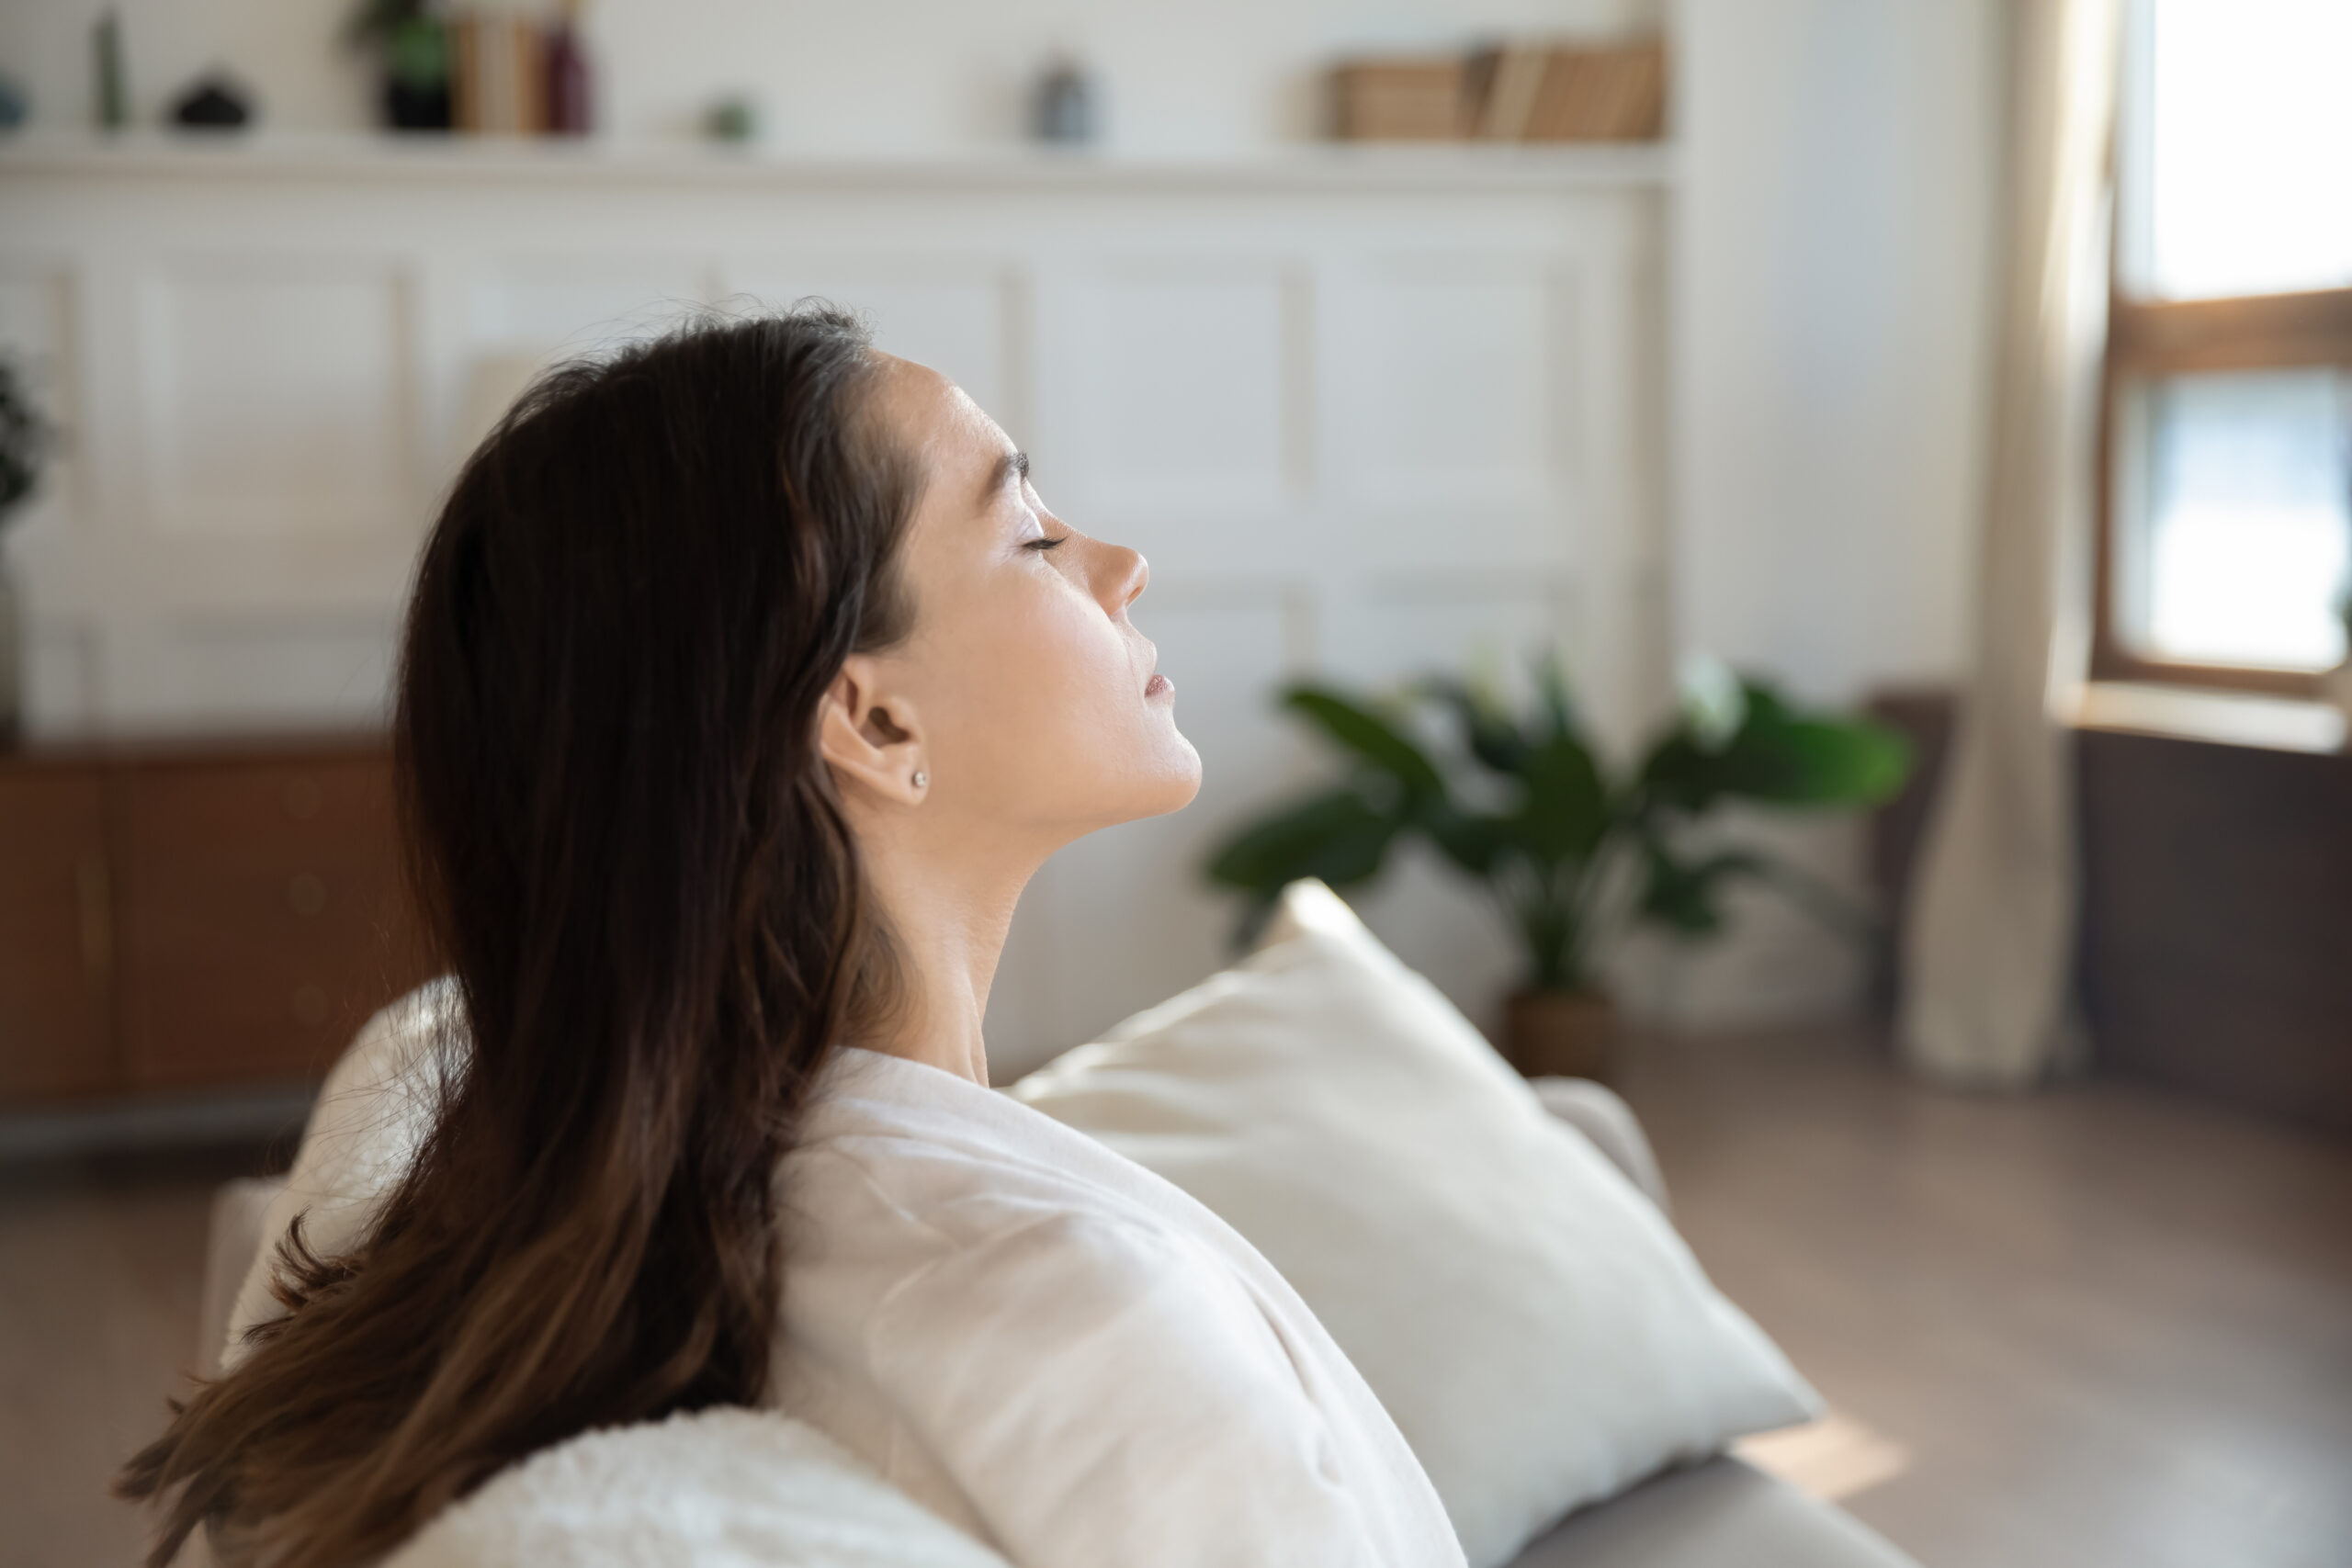 Serene lady taking pause meditating on sofa with closed eyes